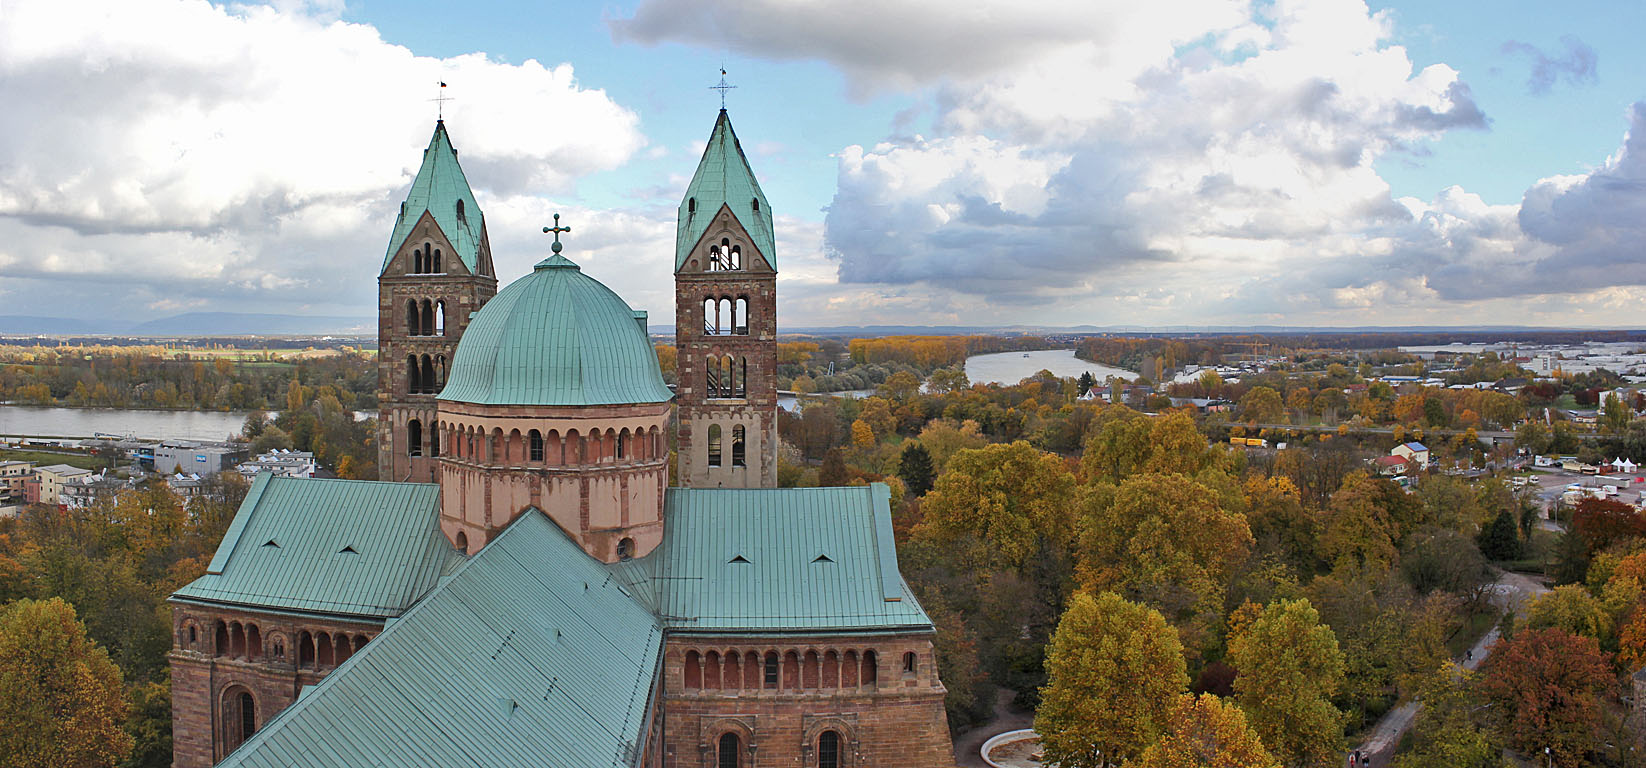 Datei:Speyer-Kaiserdom-SWTurm-04.jpg